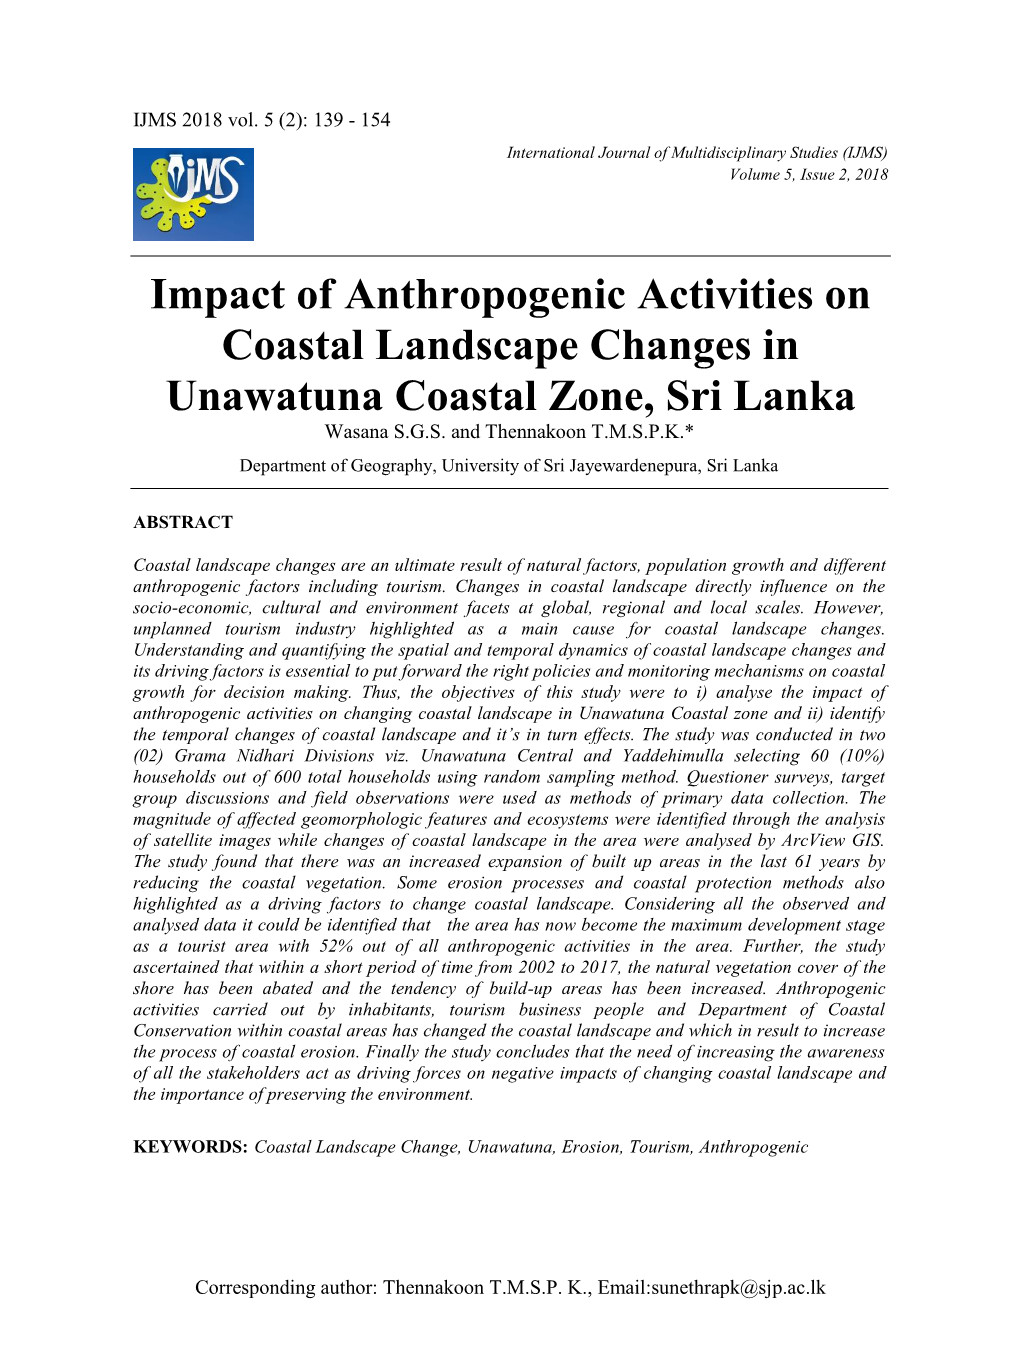 Impact of Anthropogenic Activities on Coastal Landscape Changes in Unawatuna Coastal Zone, Sri Lanka Wasana S.G.S